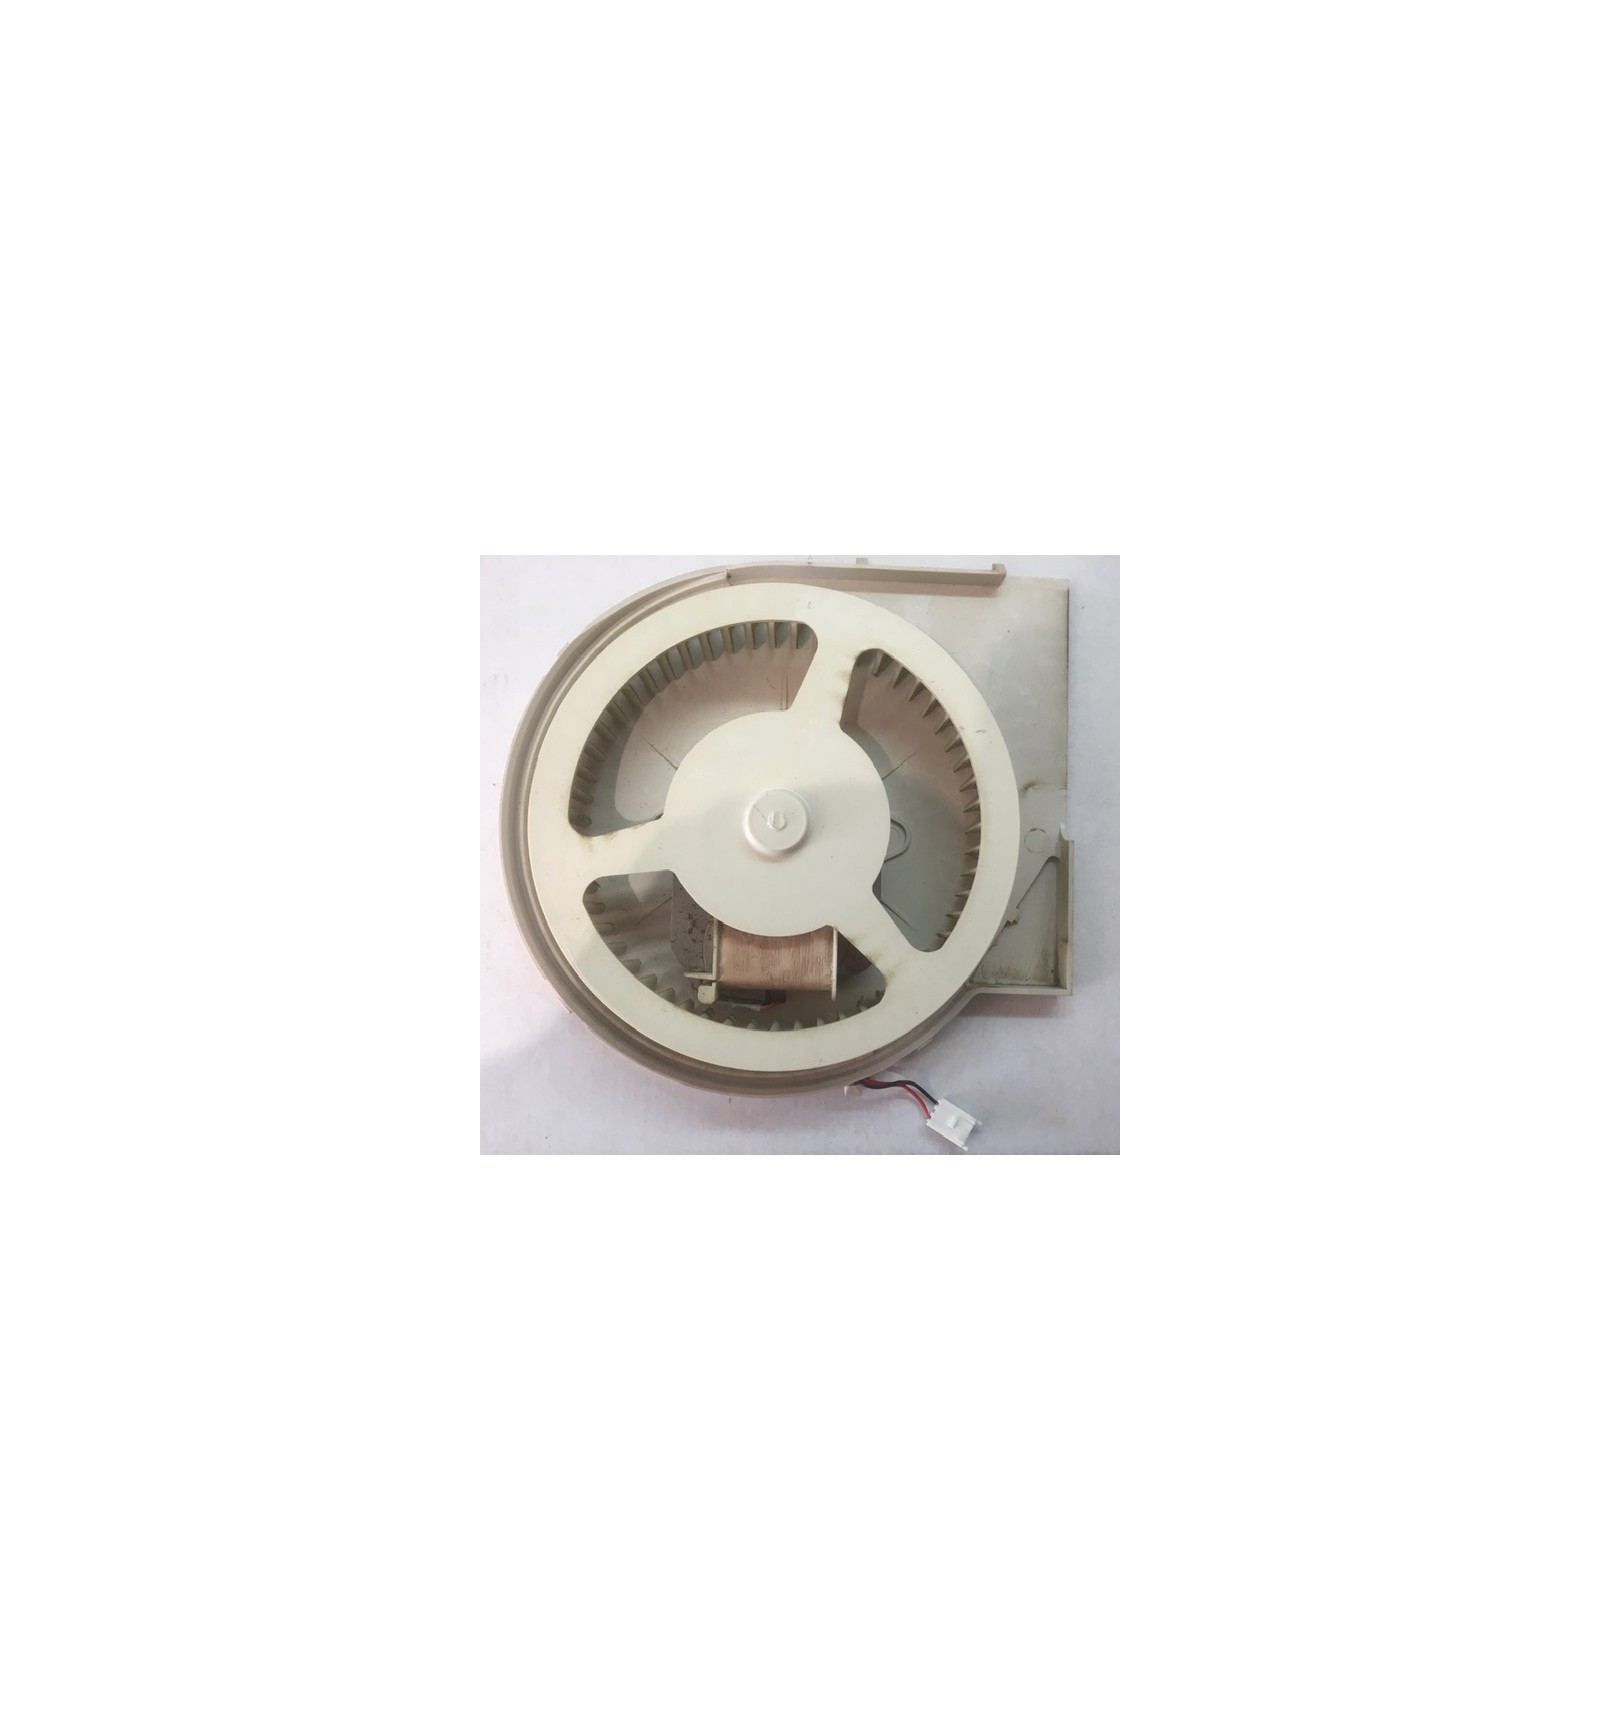 https://www.okzelectro.com/1707-thickbox_default/turbine-ventilateur-table-induction.jpg